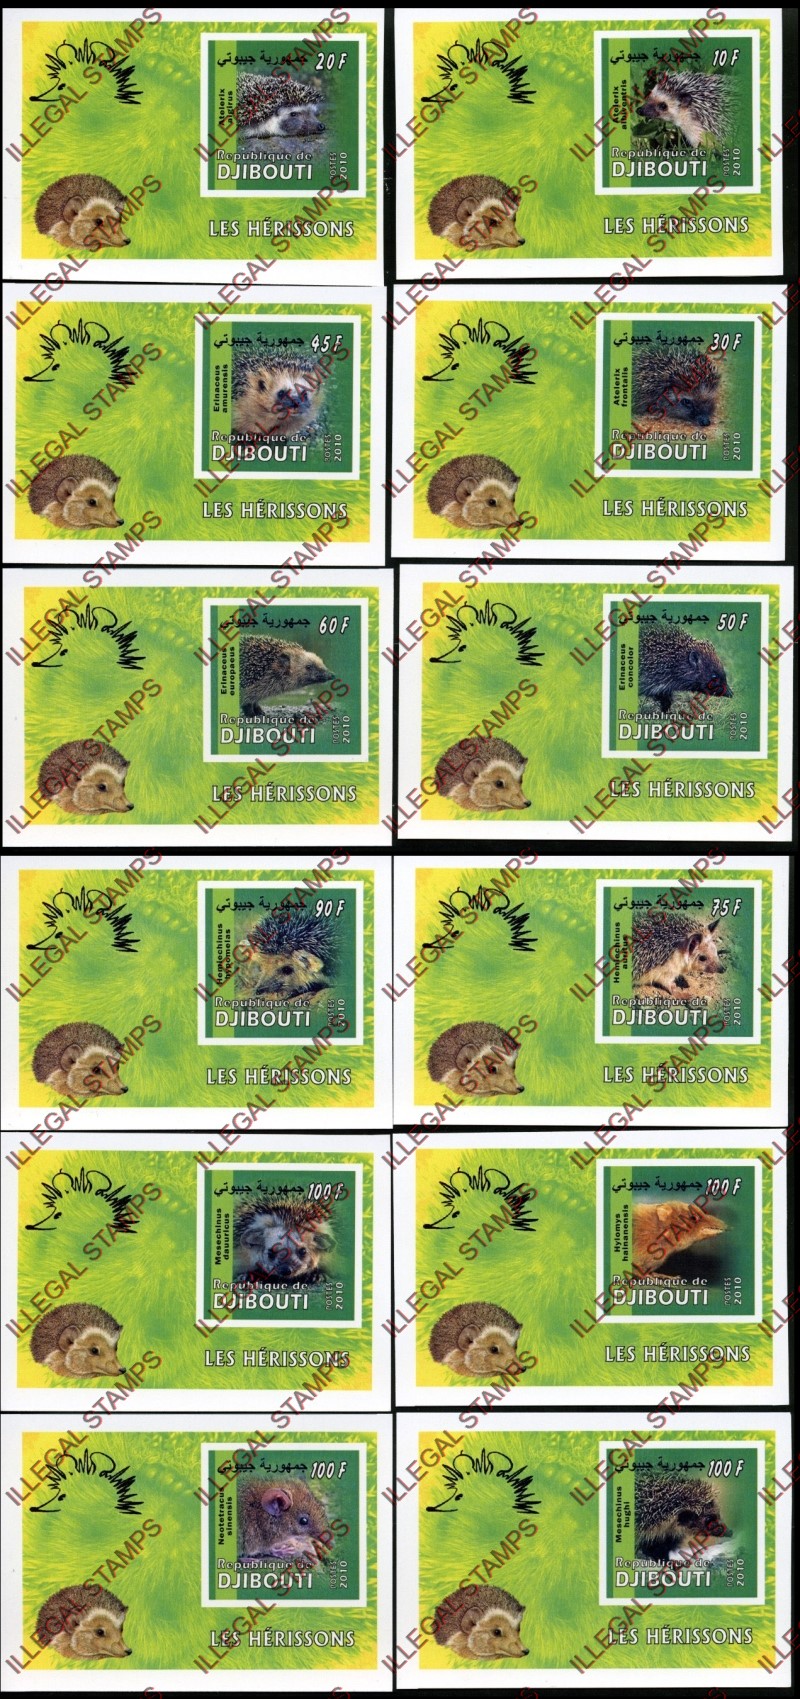 Djibouti 2010 Hedgehogs Illegal Stamp Souvenir Sheets of 1